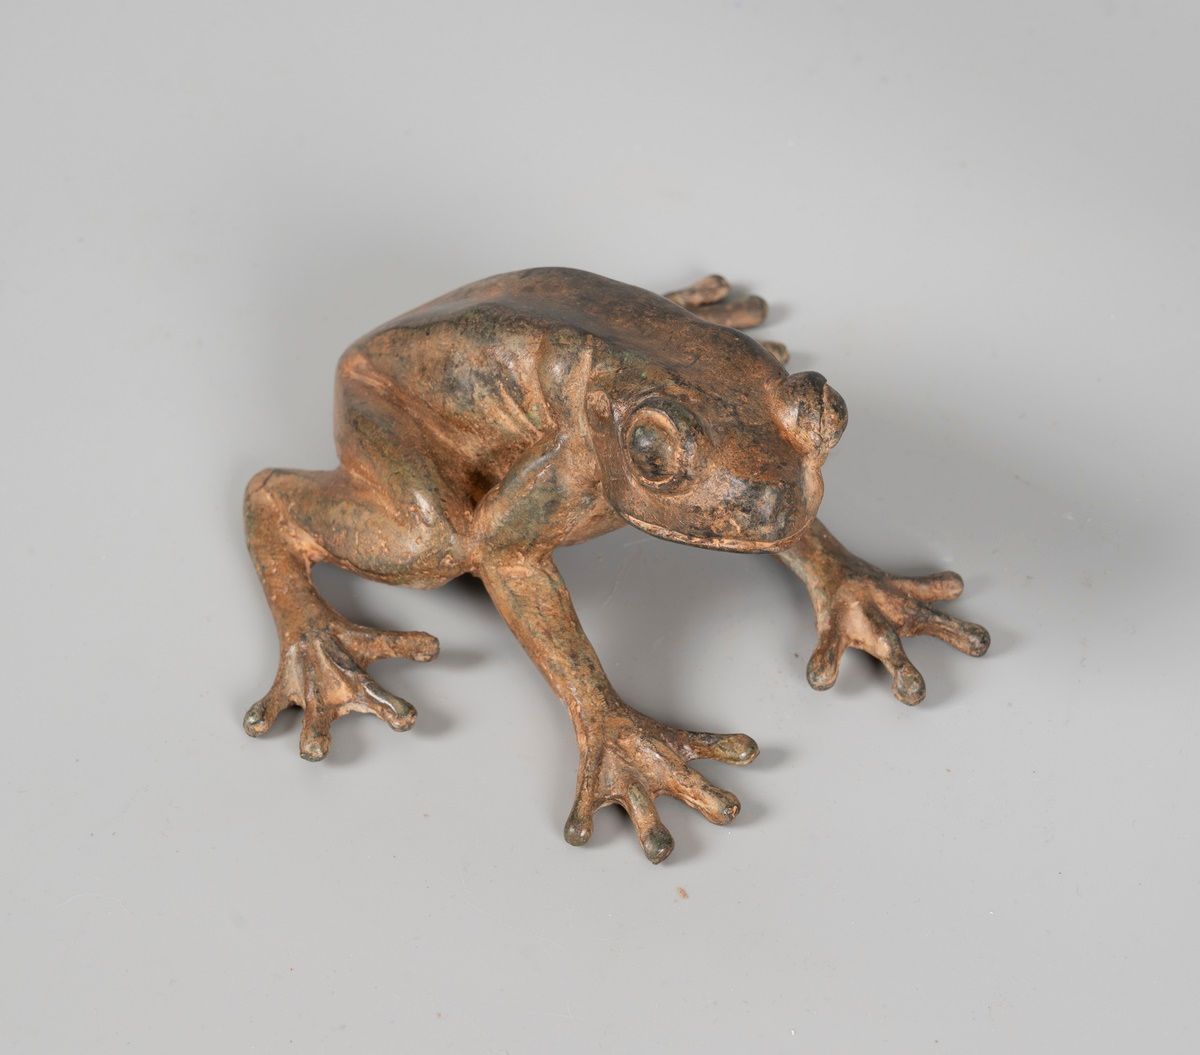 Null Pierre CHENET

蛙人

棕色铜质证明

高度：7厘米7厘米 - 长度：14.5厘米